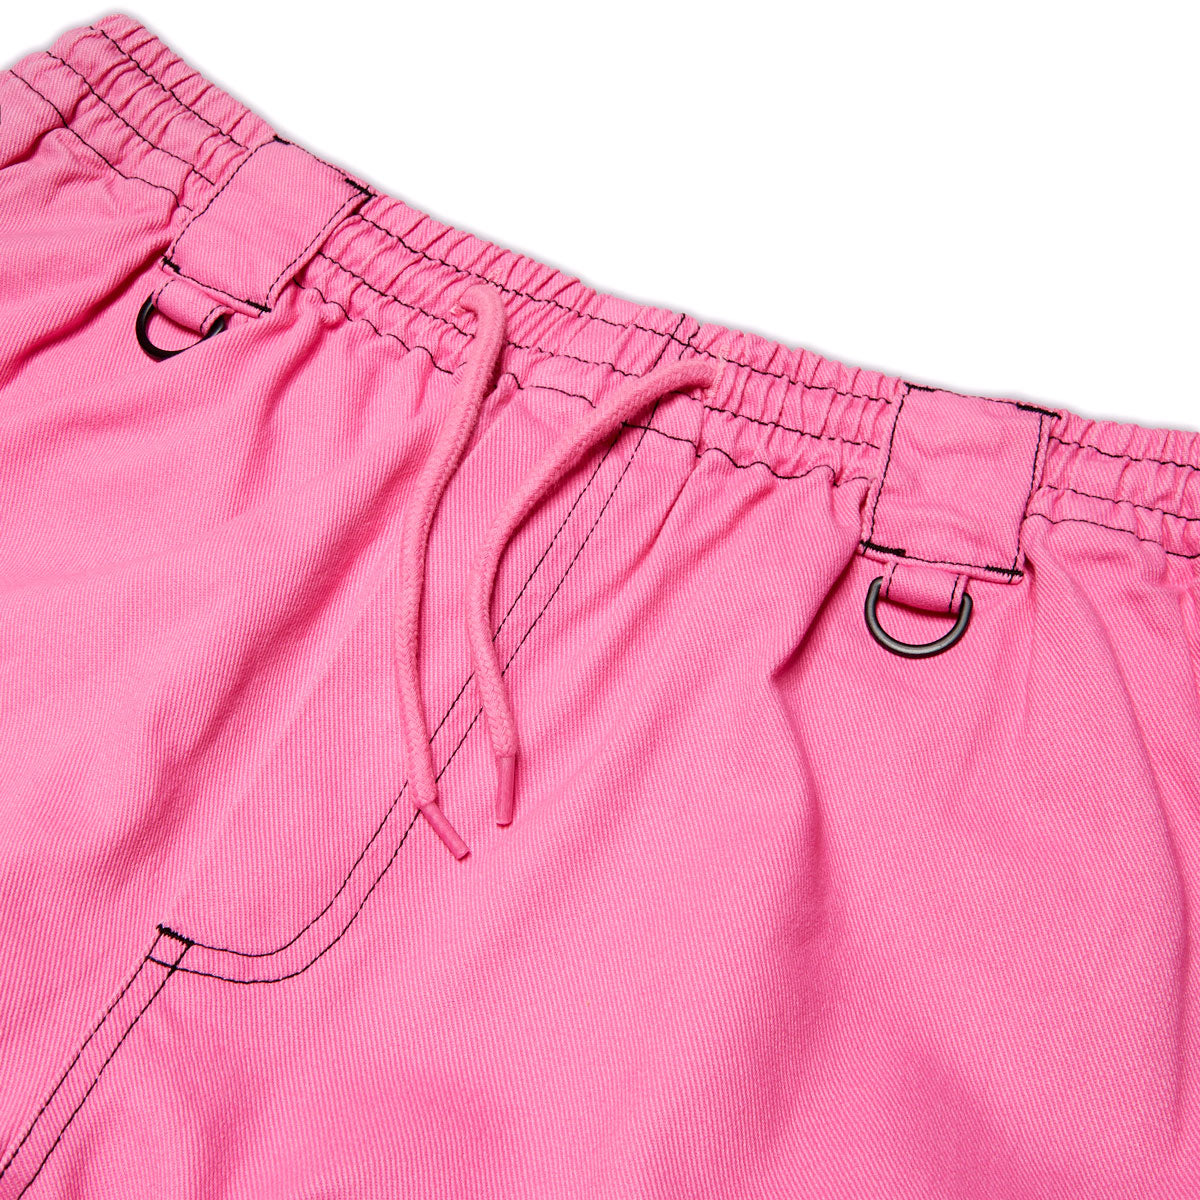 CCS Titus Twill Cargo Pants - Pink/Black image 7